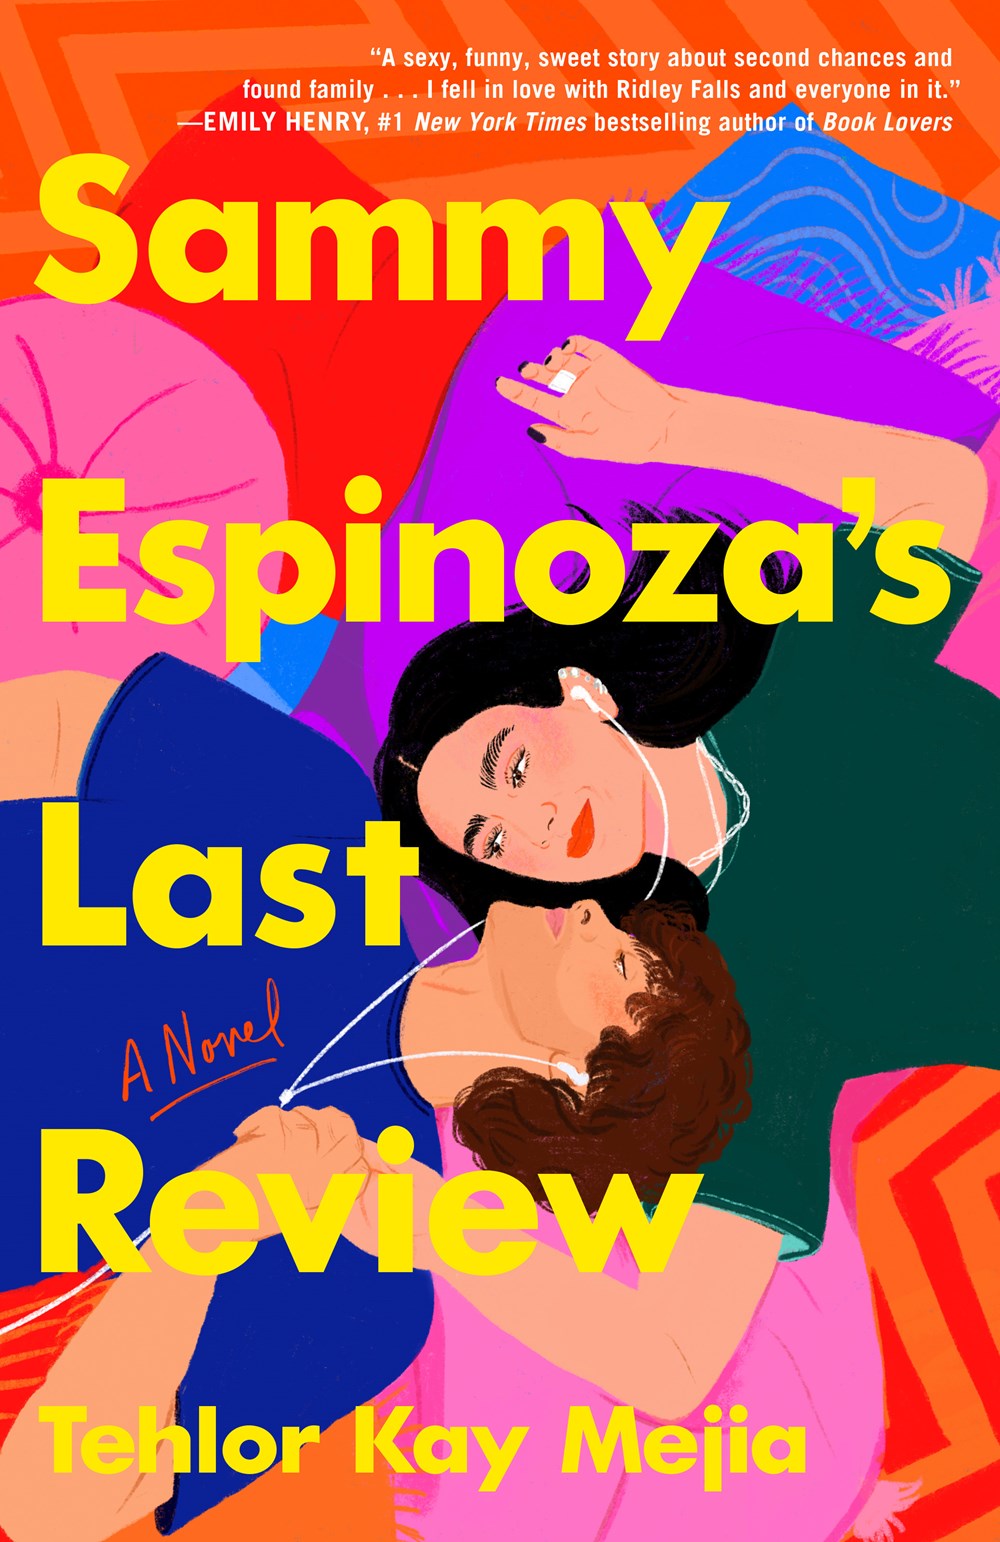 Sammy Espinoza's Last Review by Tehlor Kay Mejia (Paperback)